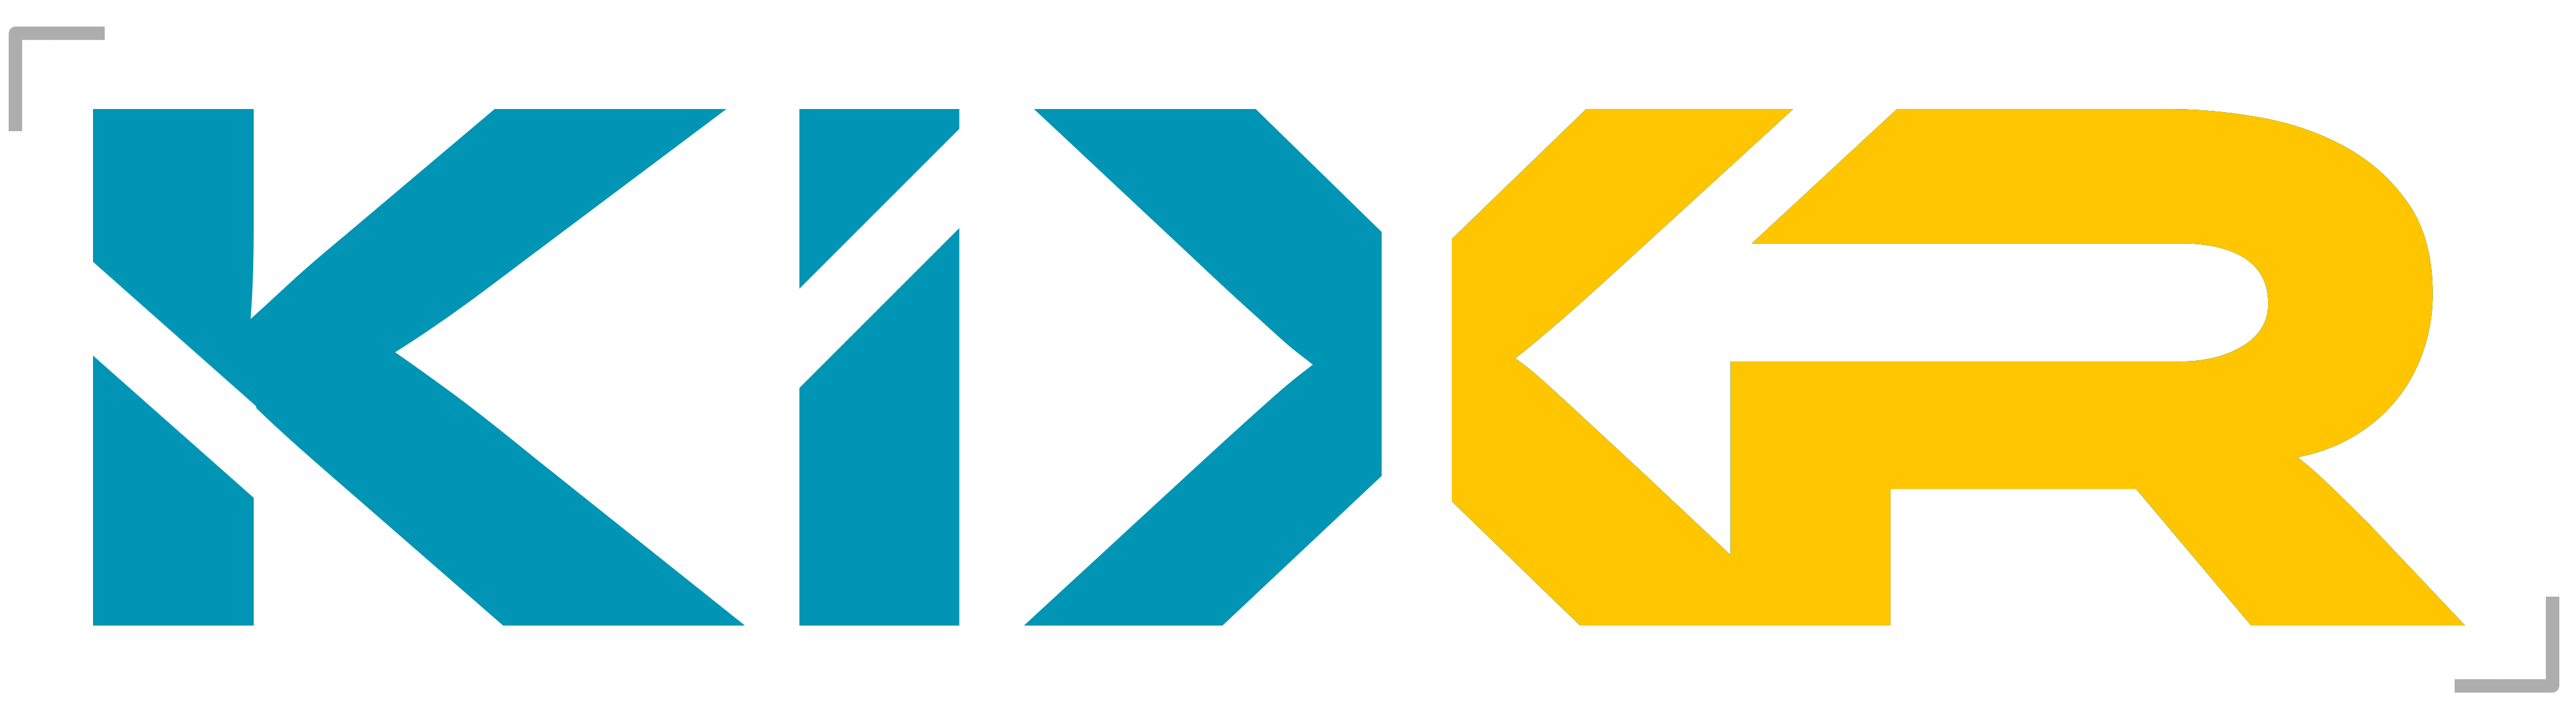 KiXR logo